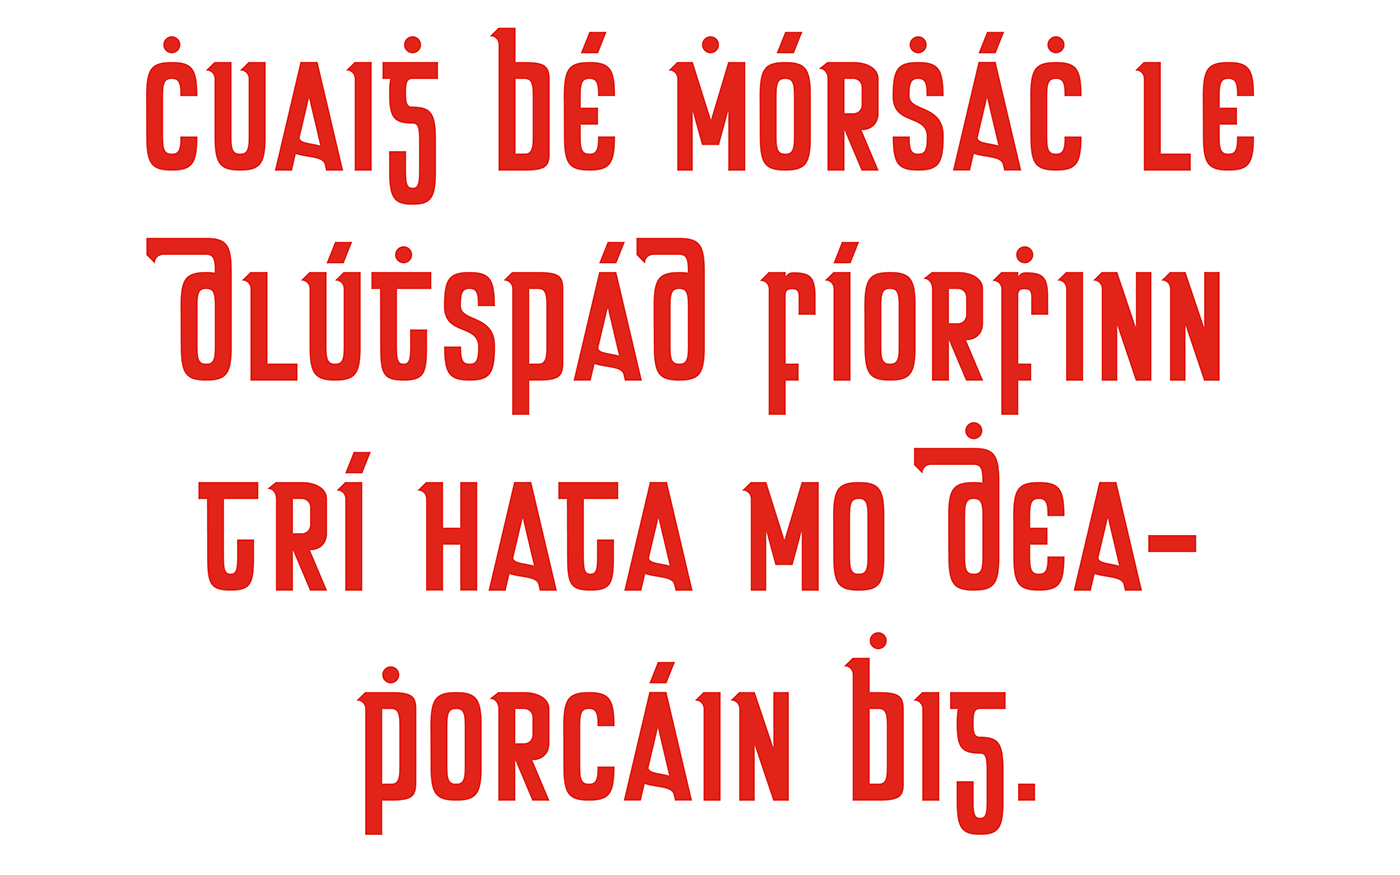 Typeface font gaeilge Irish language slovakia Bratislava communist socialist Ireland specimen